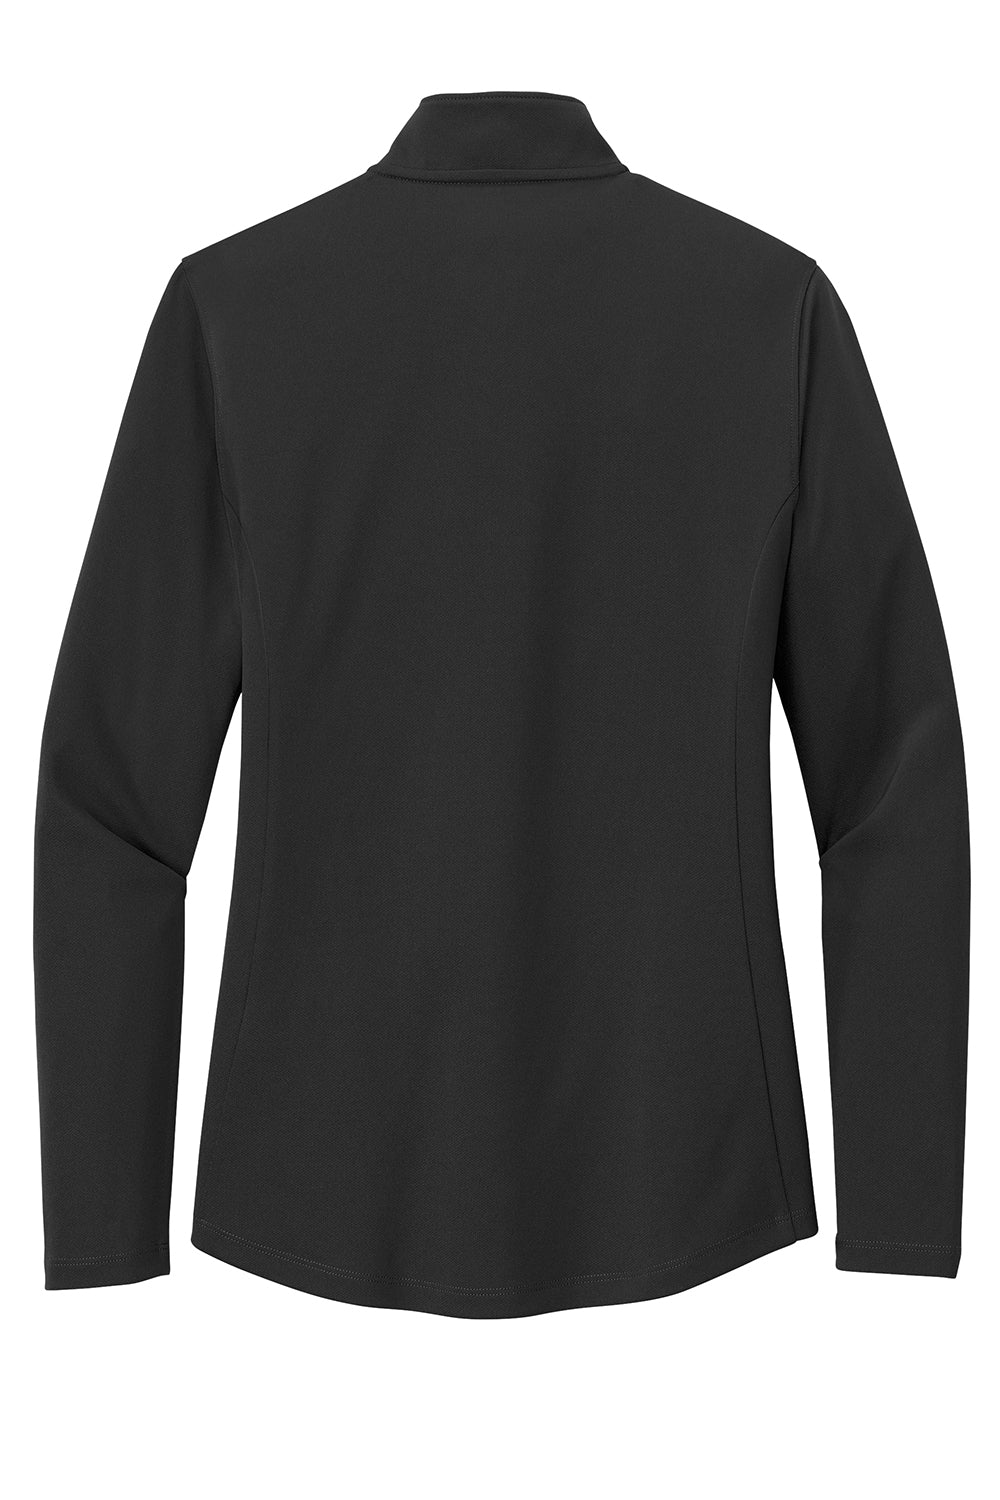 Port Authority LK112 Womens Dry Zone UV Micro Mesh 1/4 Zip Sweatshirt Deep Black Flat Back